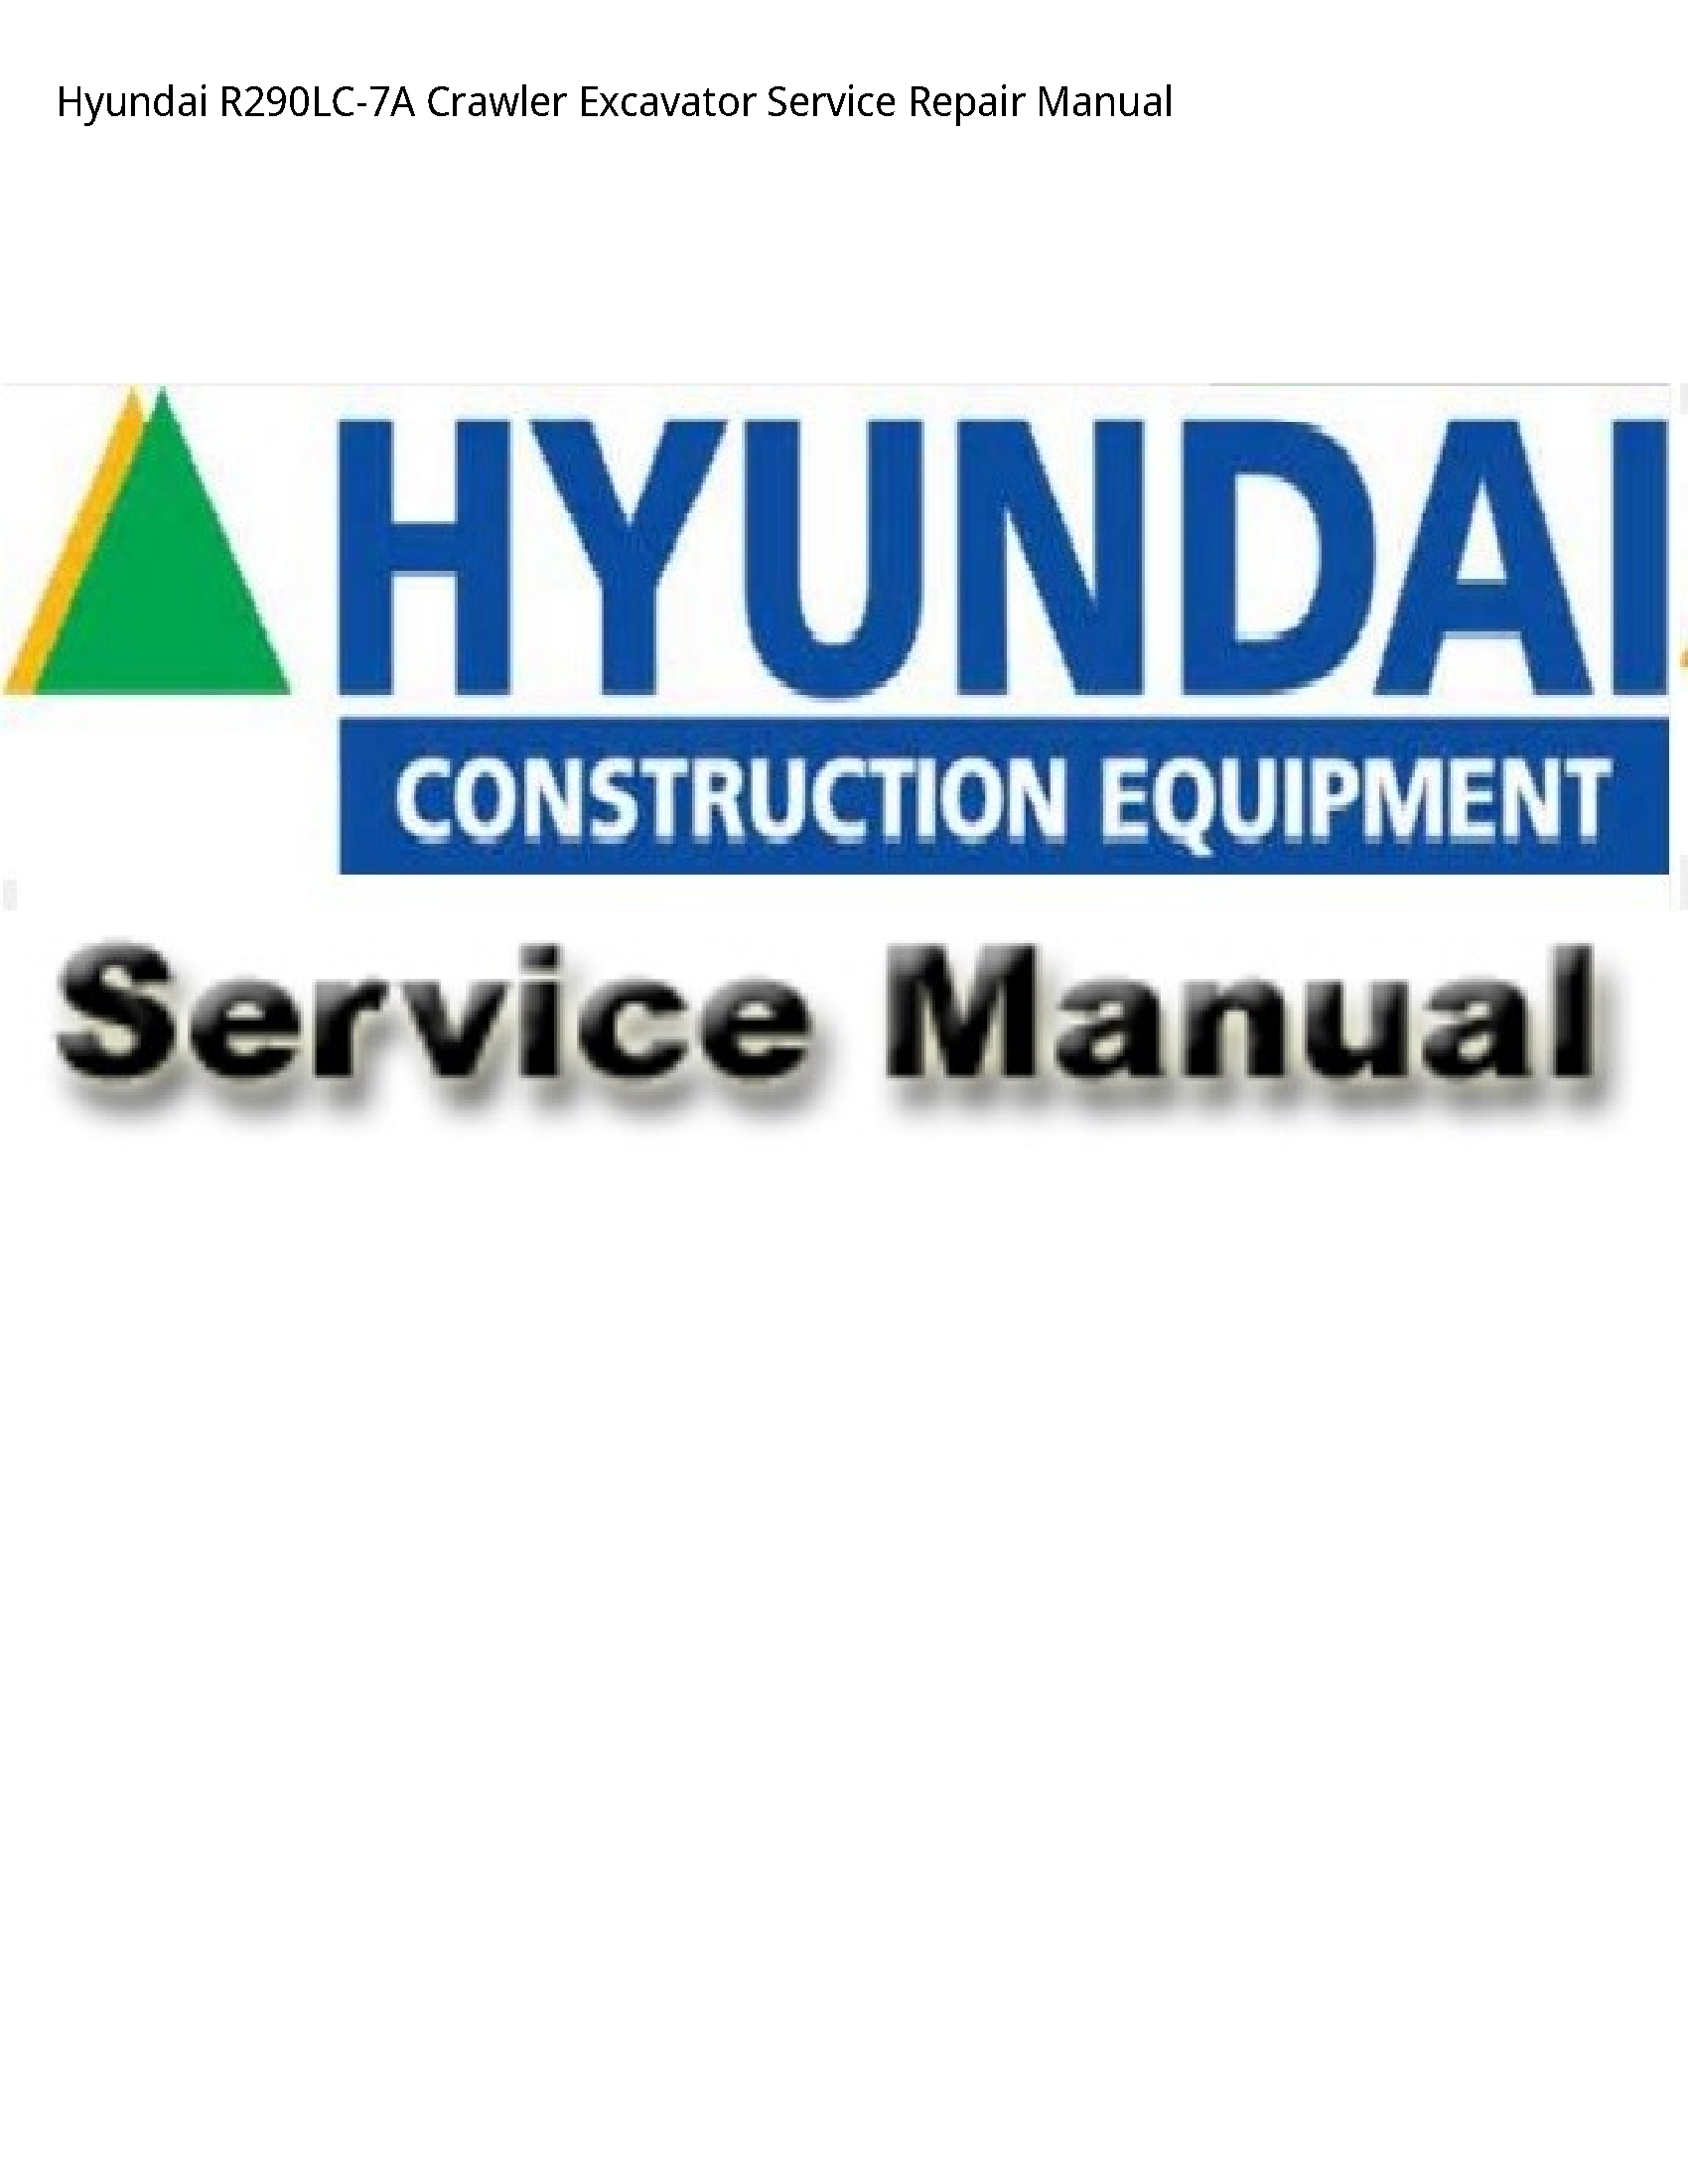 Hyundai R290LC-7A Crawler Excavator manual